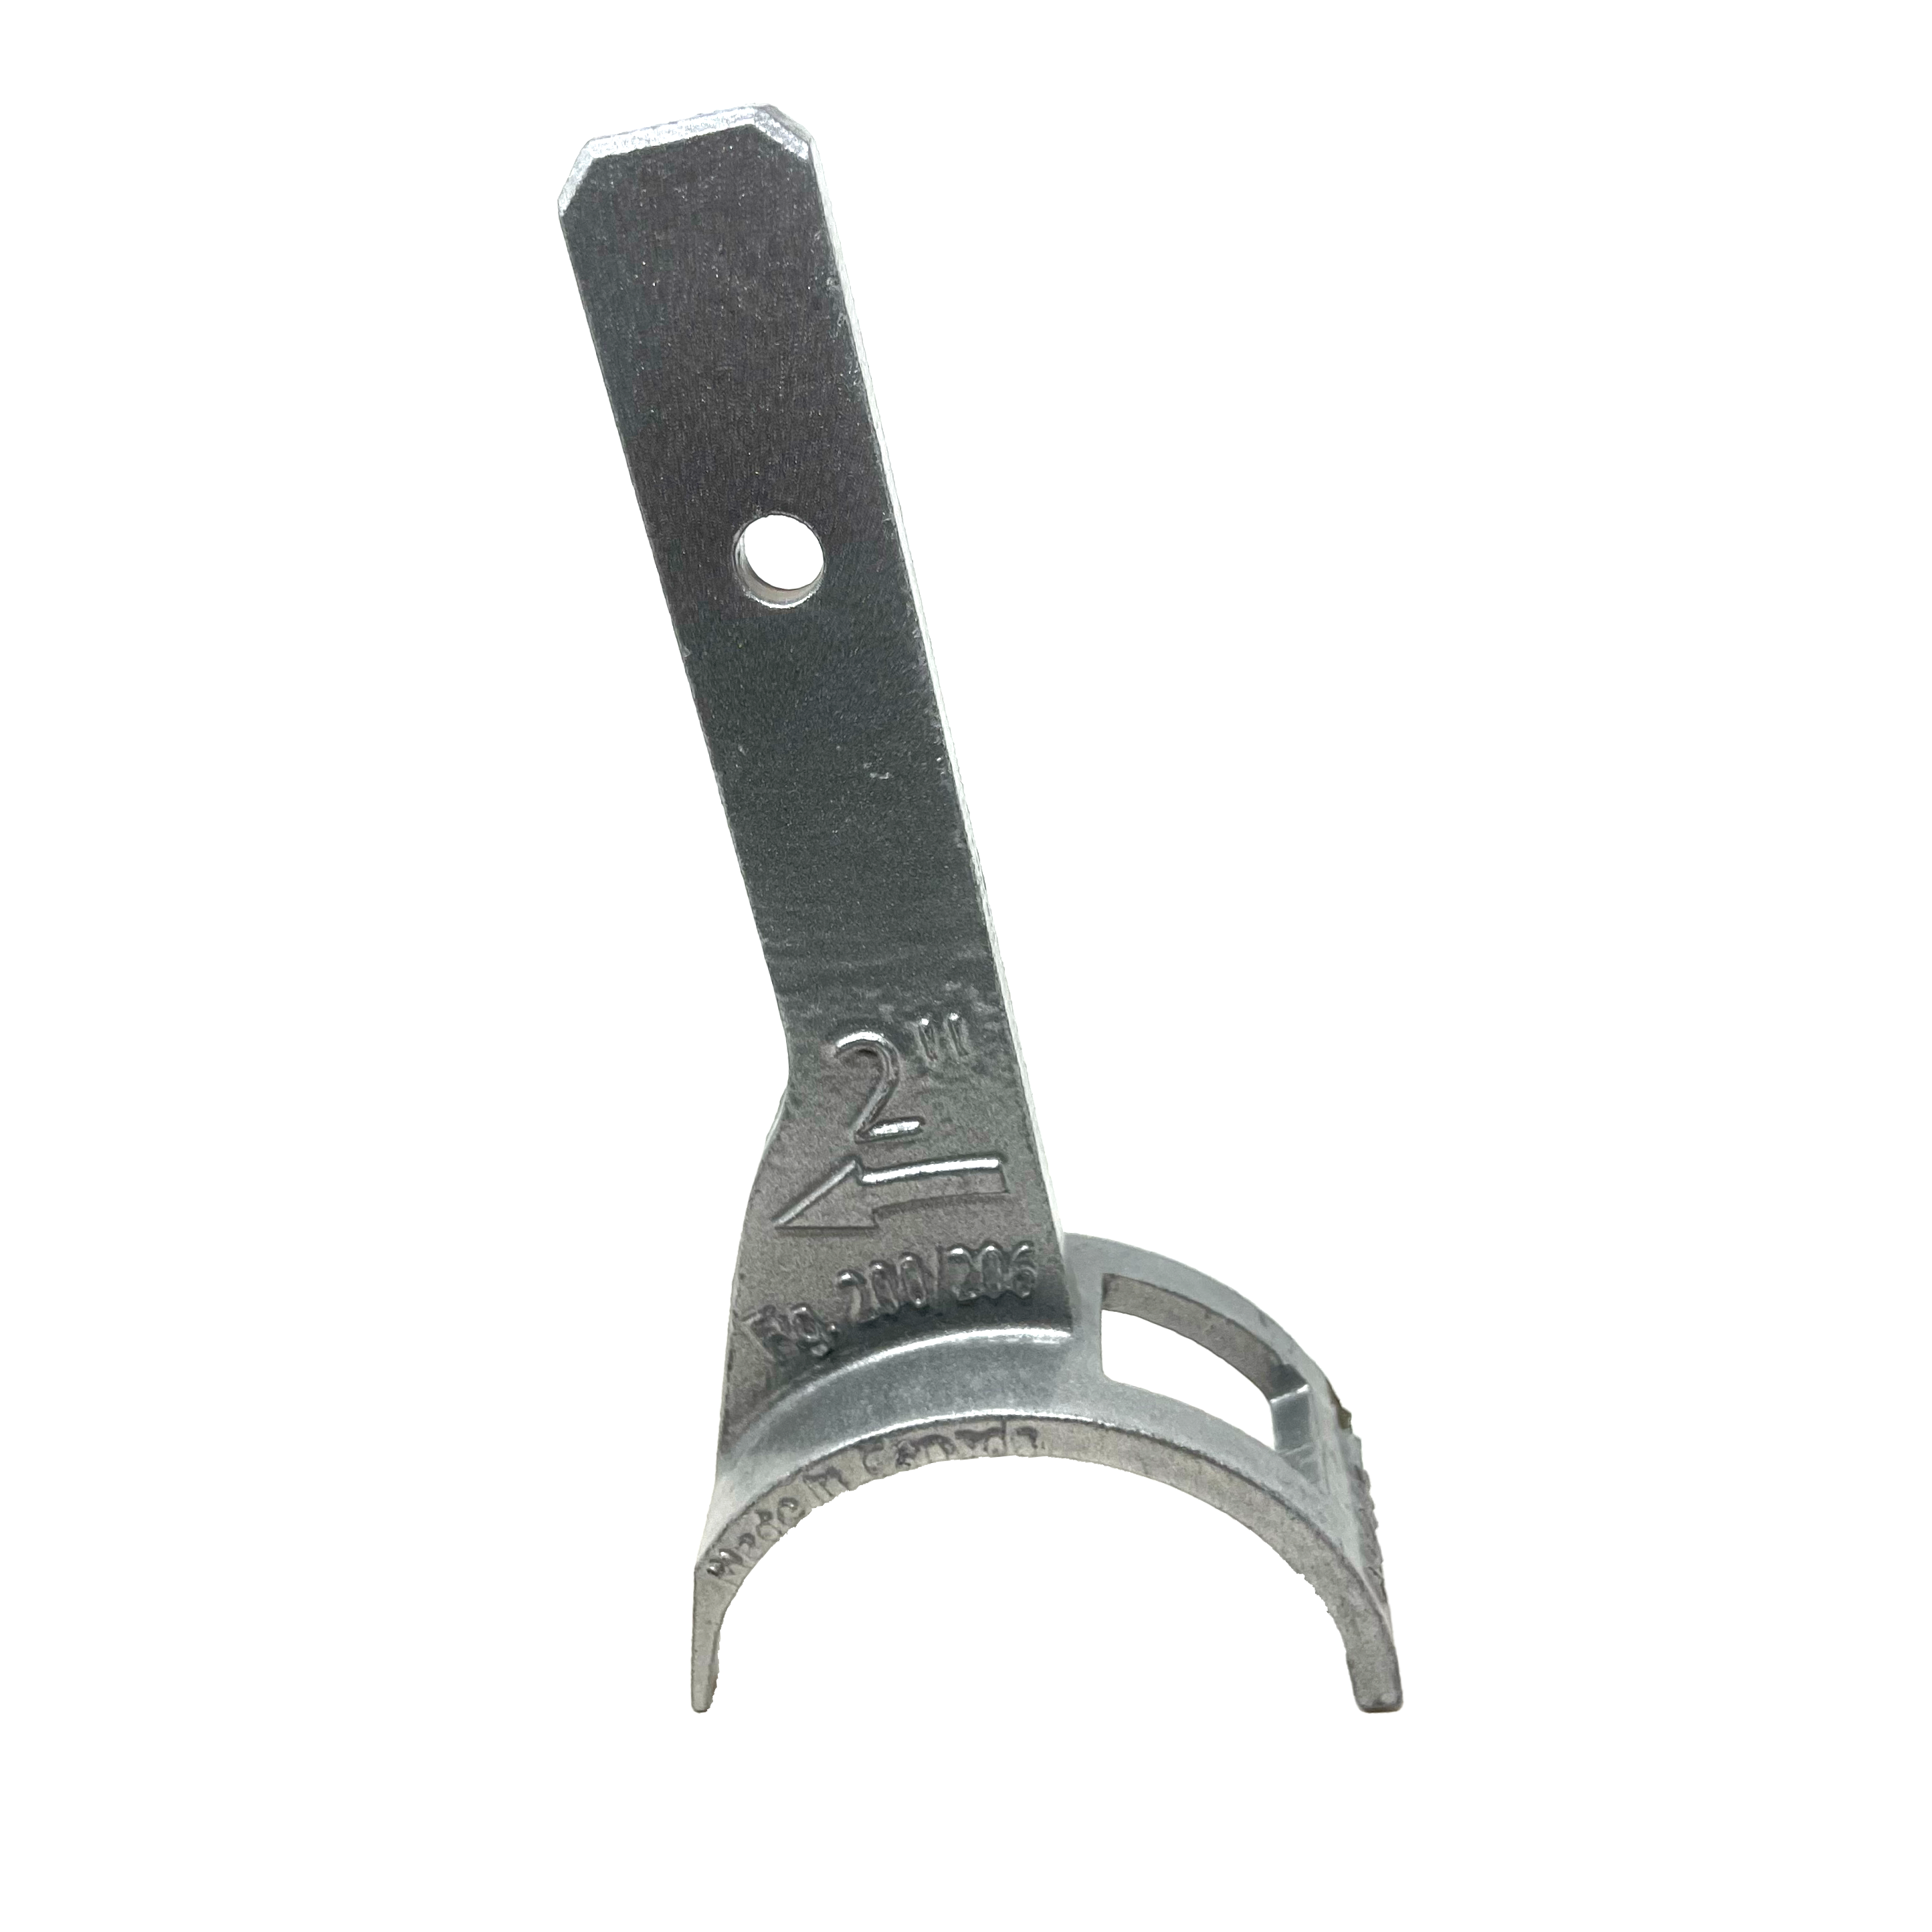 710-0019 HUWE Wrench Head for 2" Figure 100, Figure 200, Figure 206, Figure 400